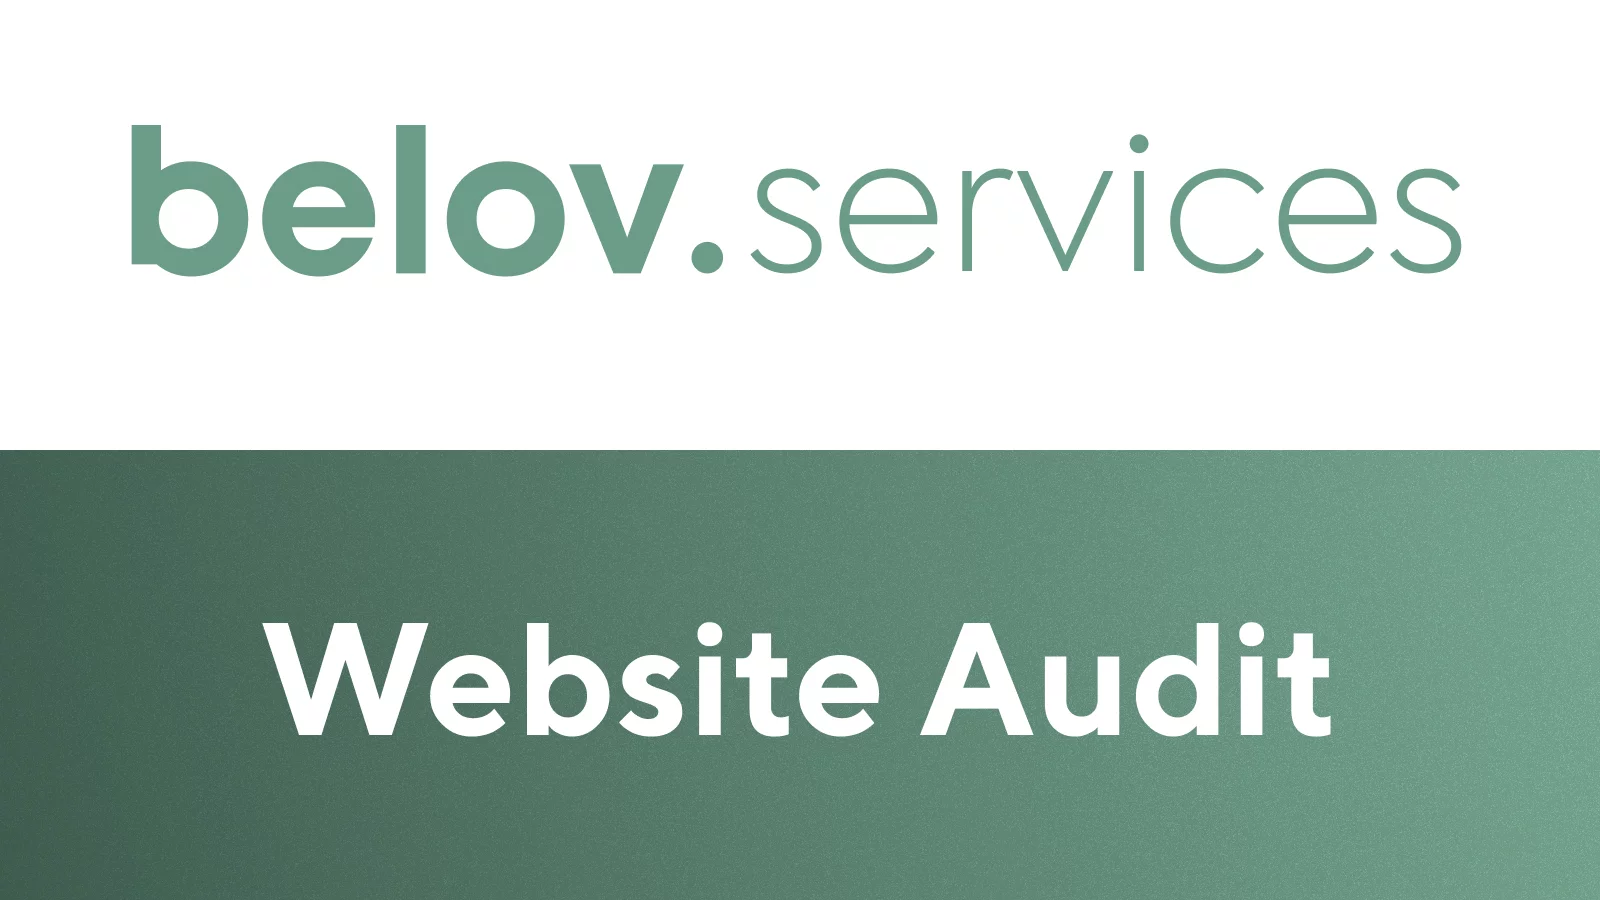 Website Audit Services by Belov Digital Agency